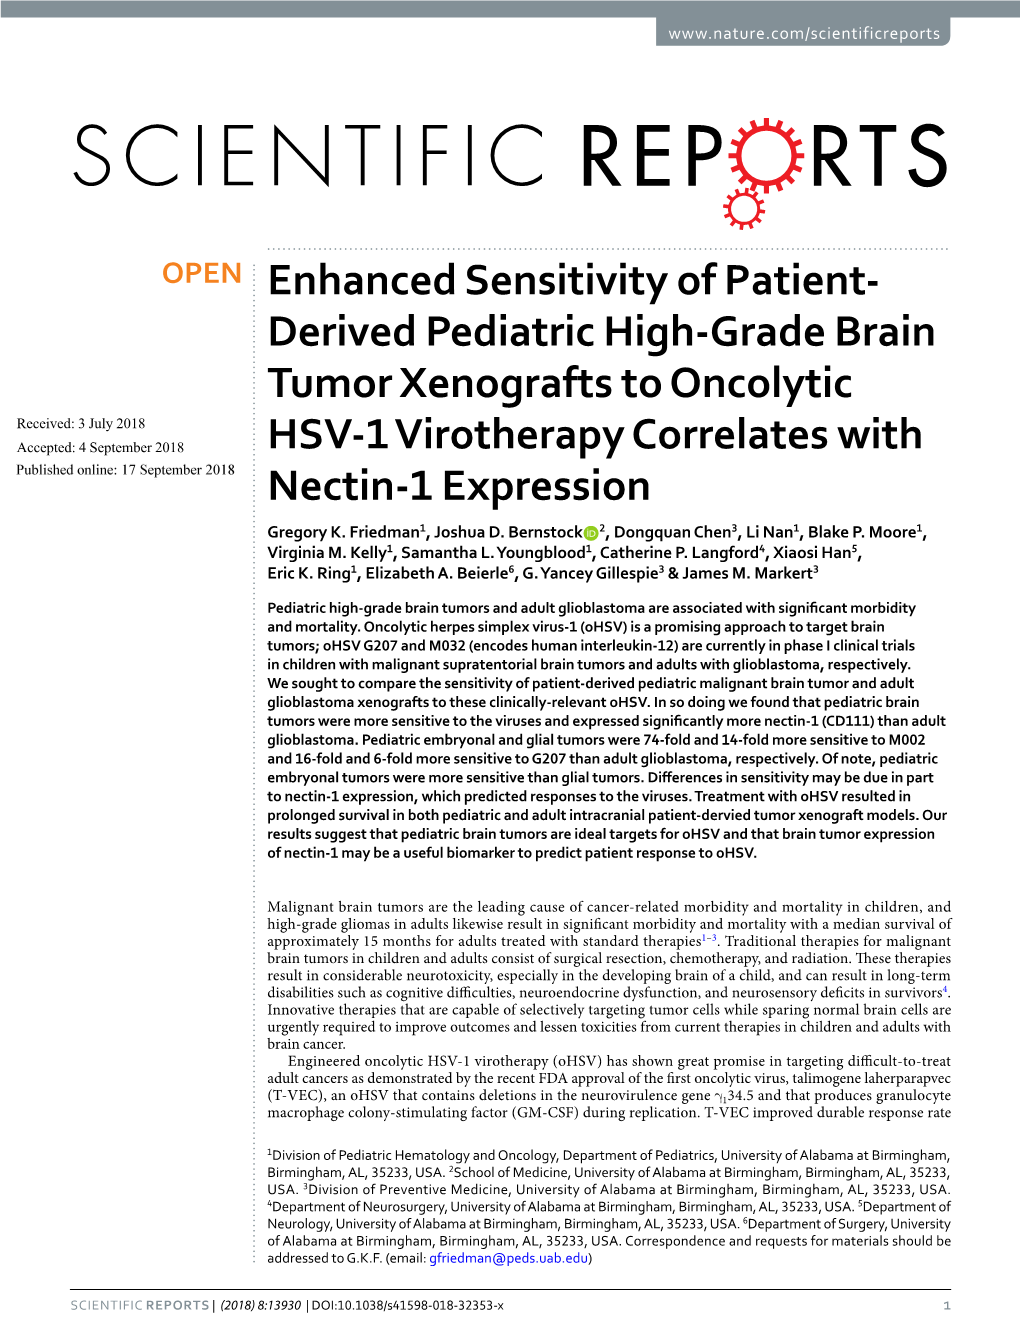 Derived Pediatric High-Grade Brain Tumor Xenografts to Oncolytic HSV